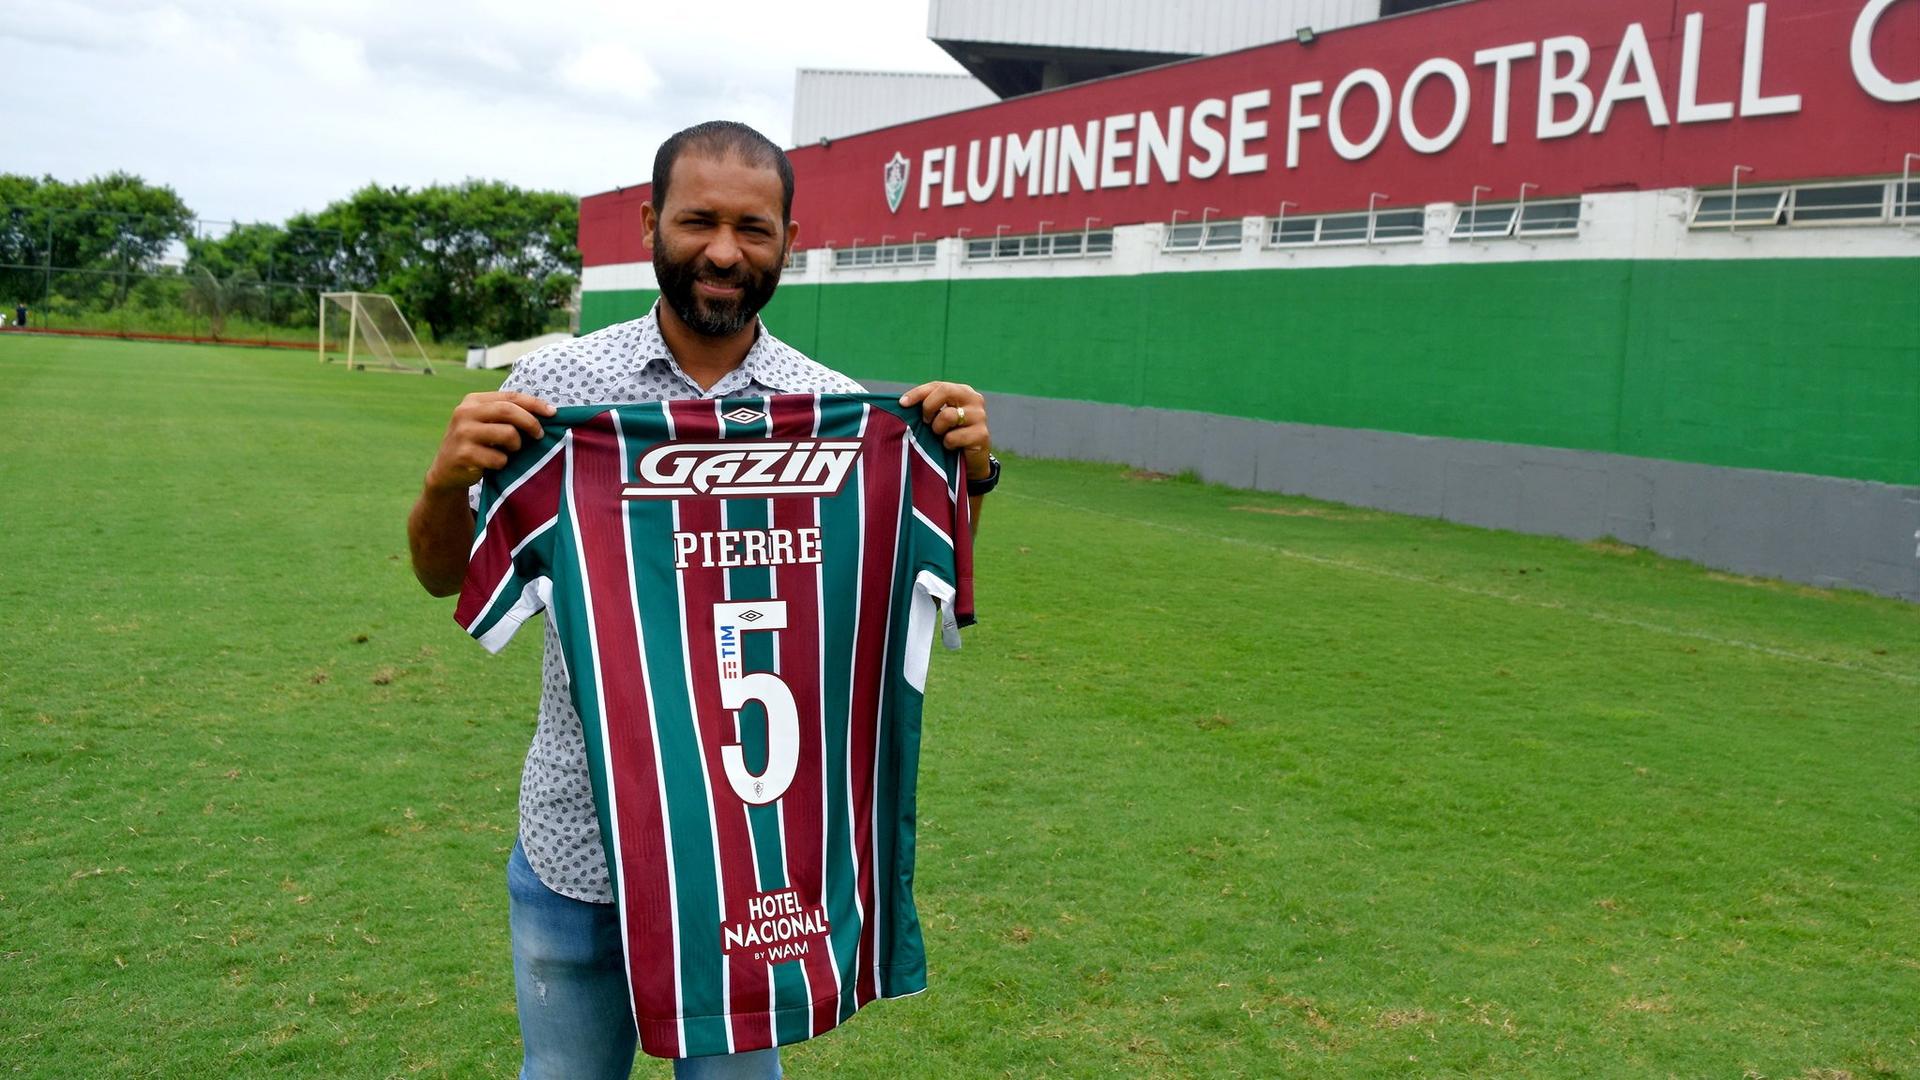 Pierre - Fluminense